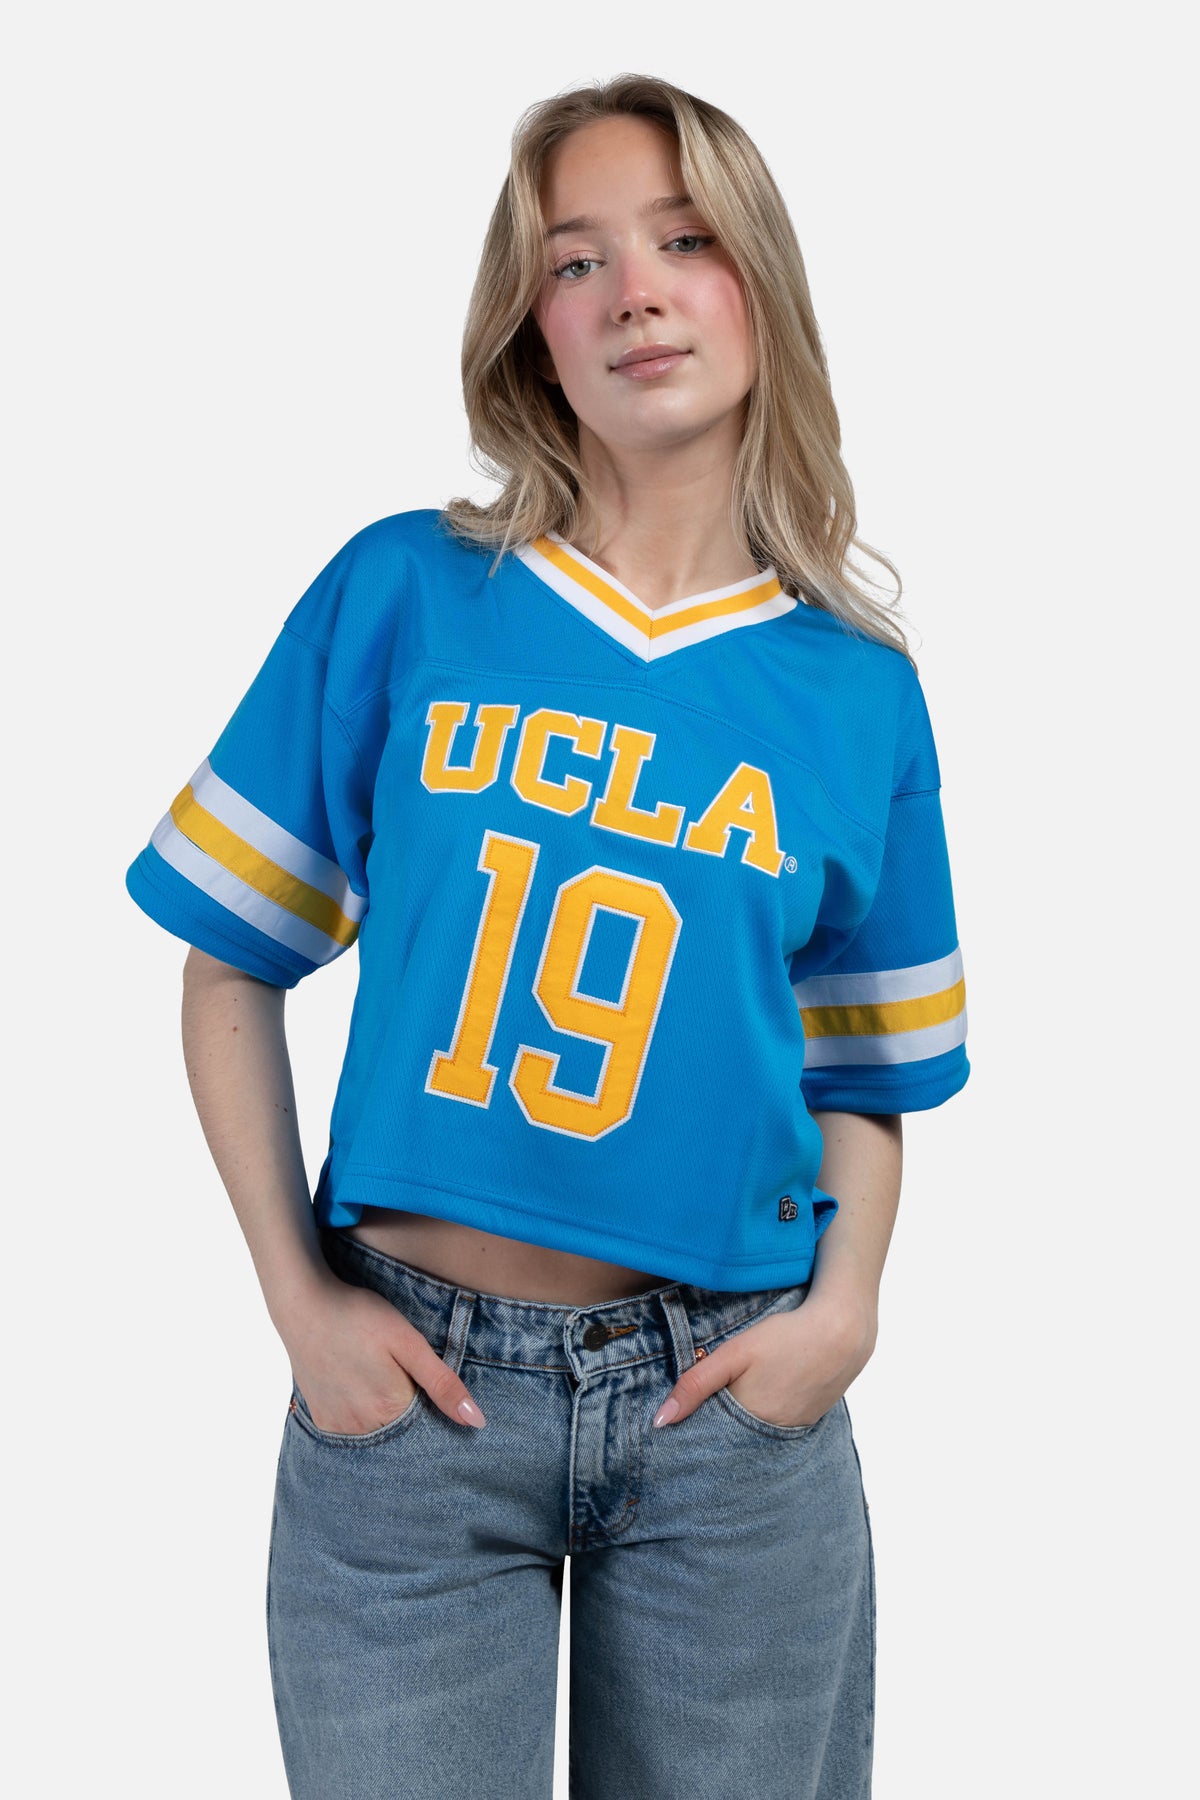 University of California Los Angeles Football Top